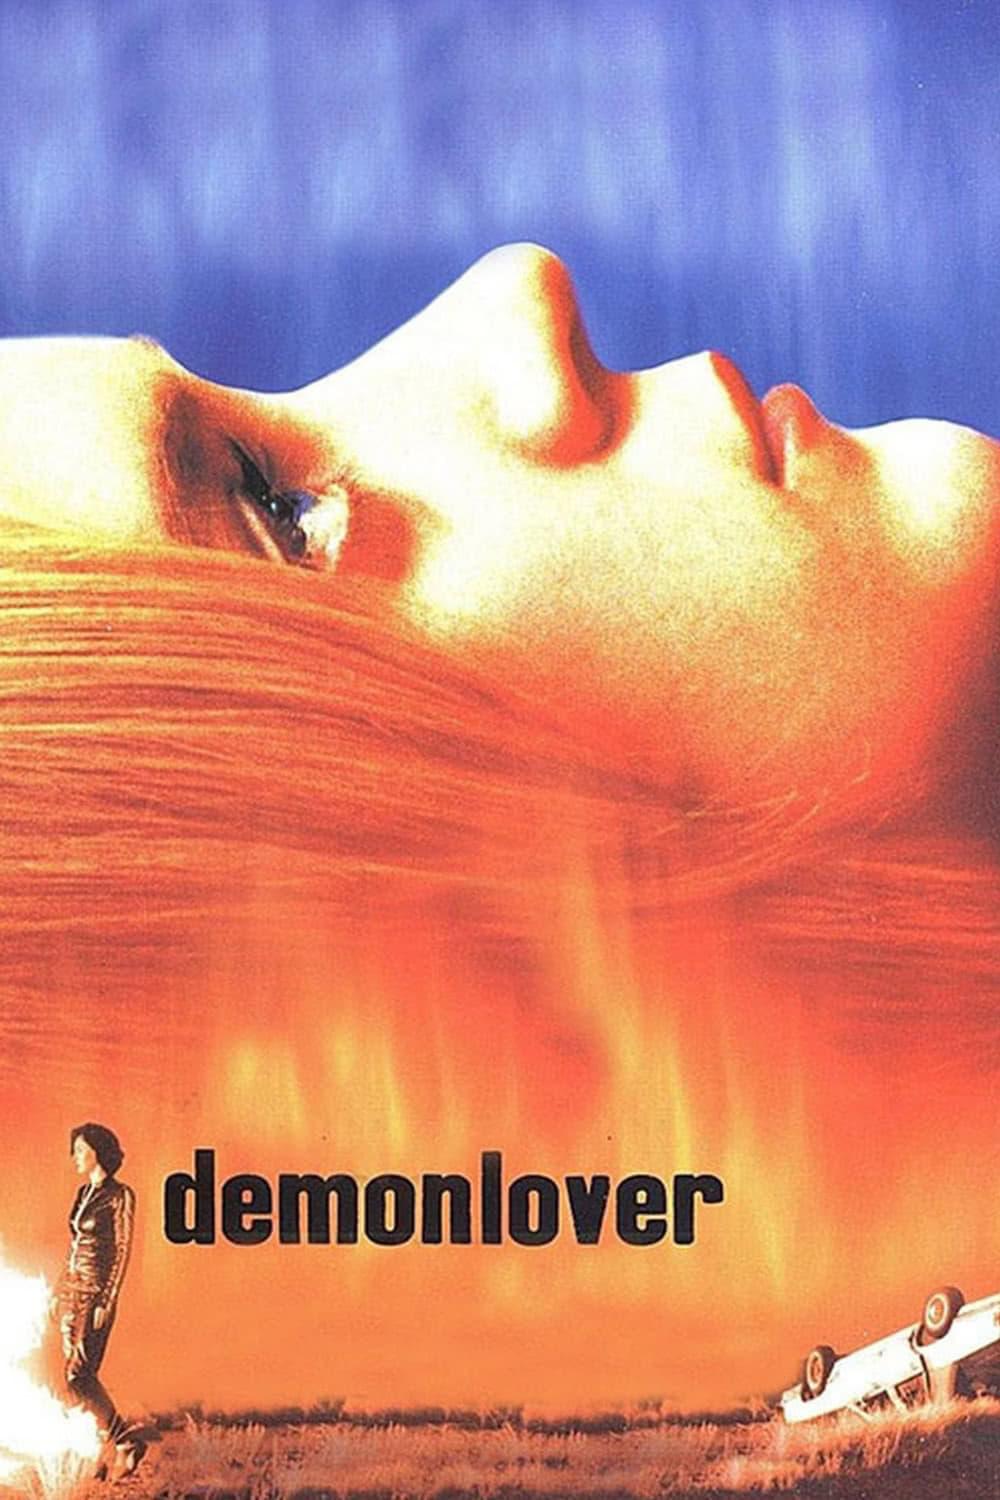 Demonlover poster